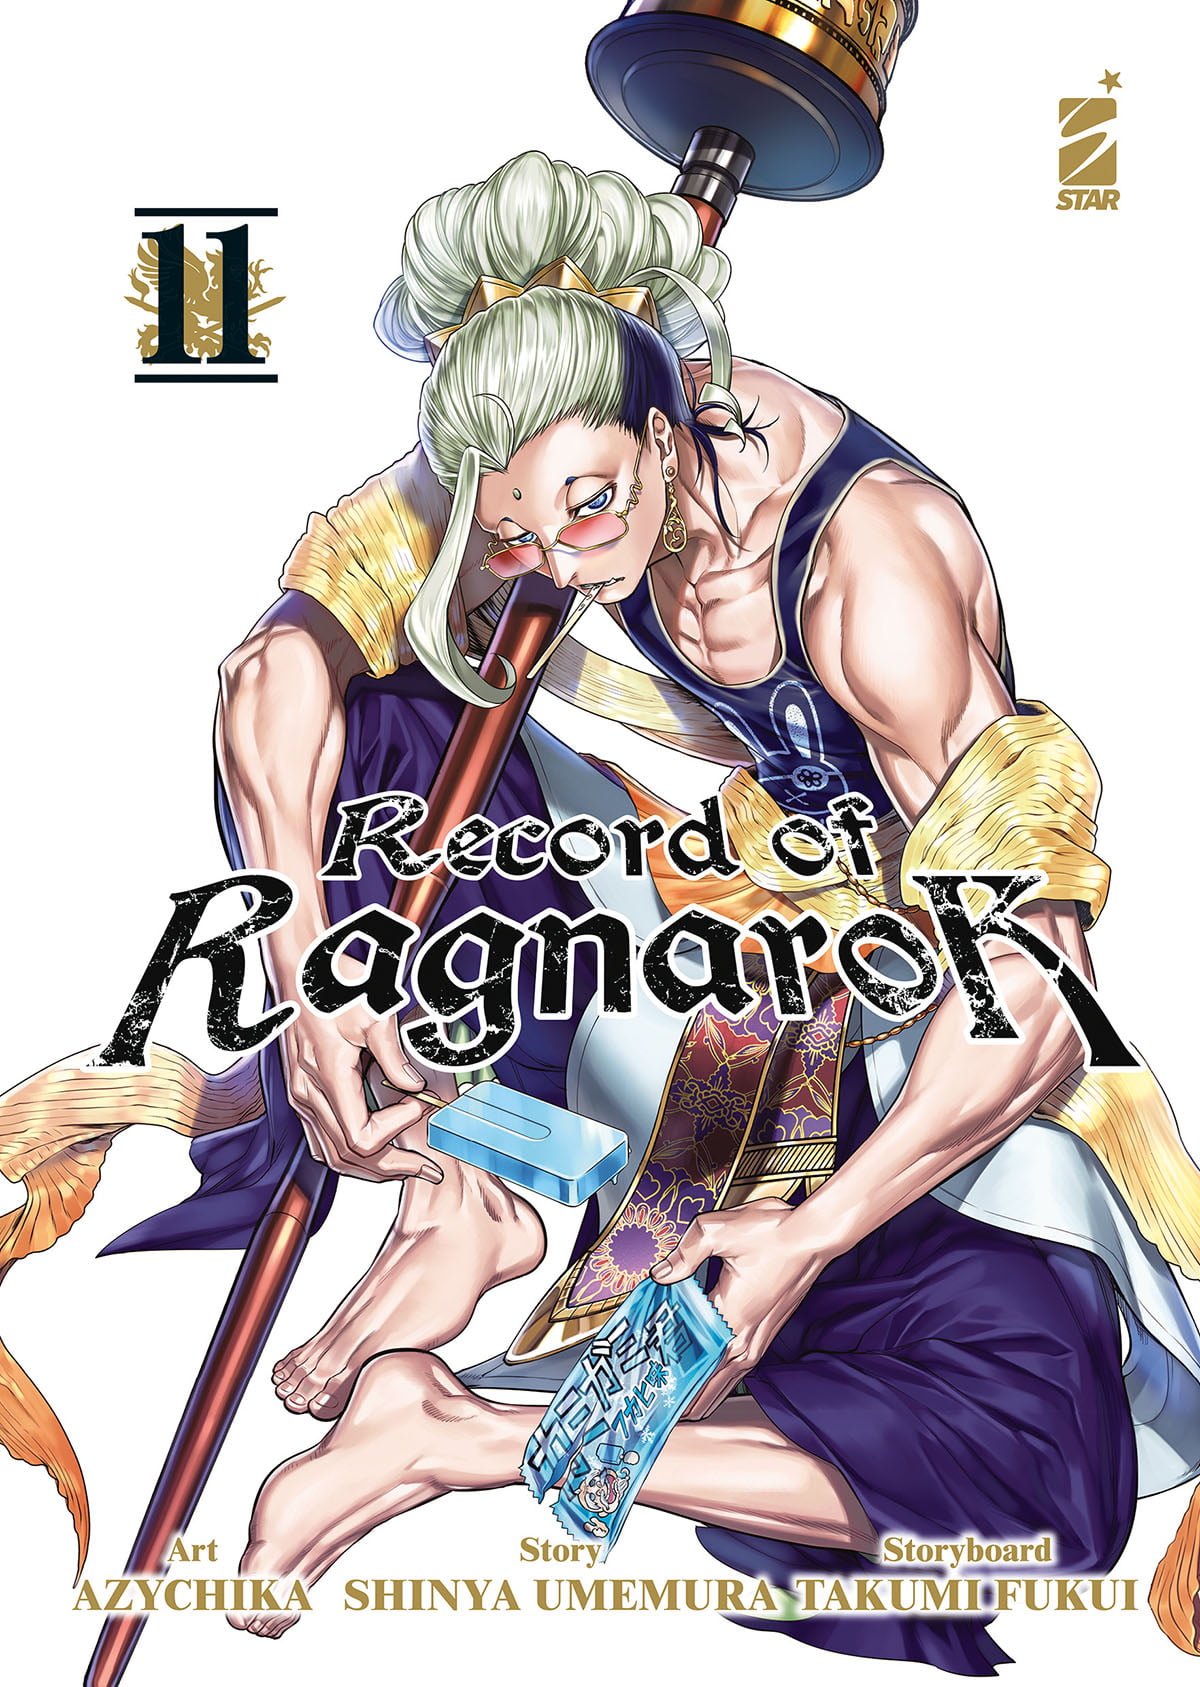 Record Of Ragnarok 14 Action 346 Star Comics Shonen Ajichika Shinya Umemura Takumi Fukui